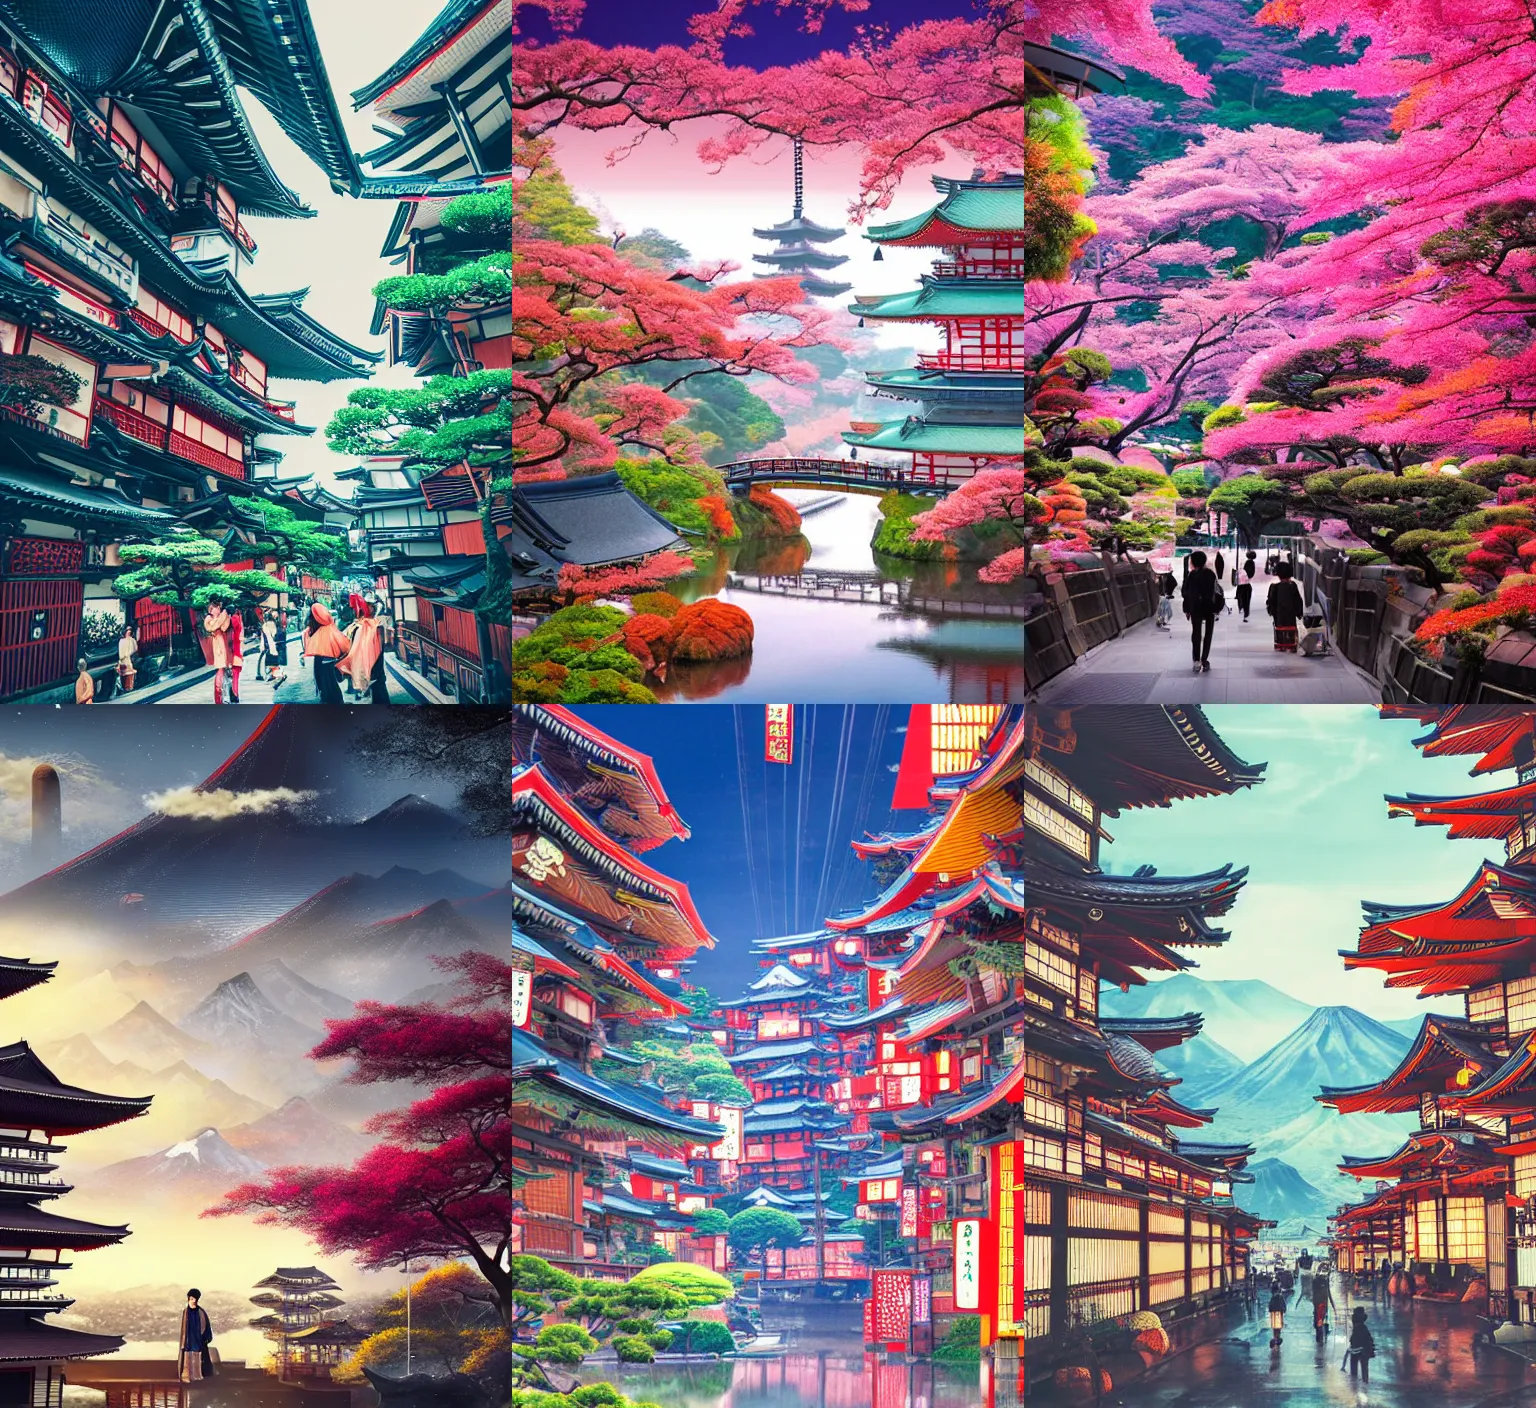 Prompt: Futuristic Japan, vibrant, fantasy landscape